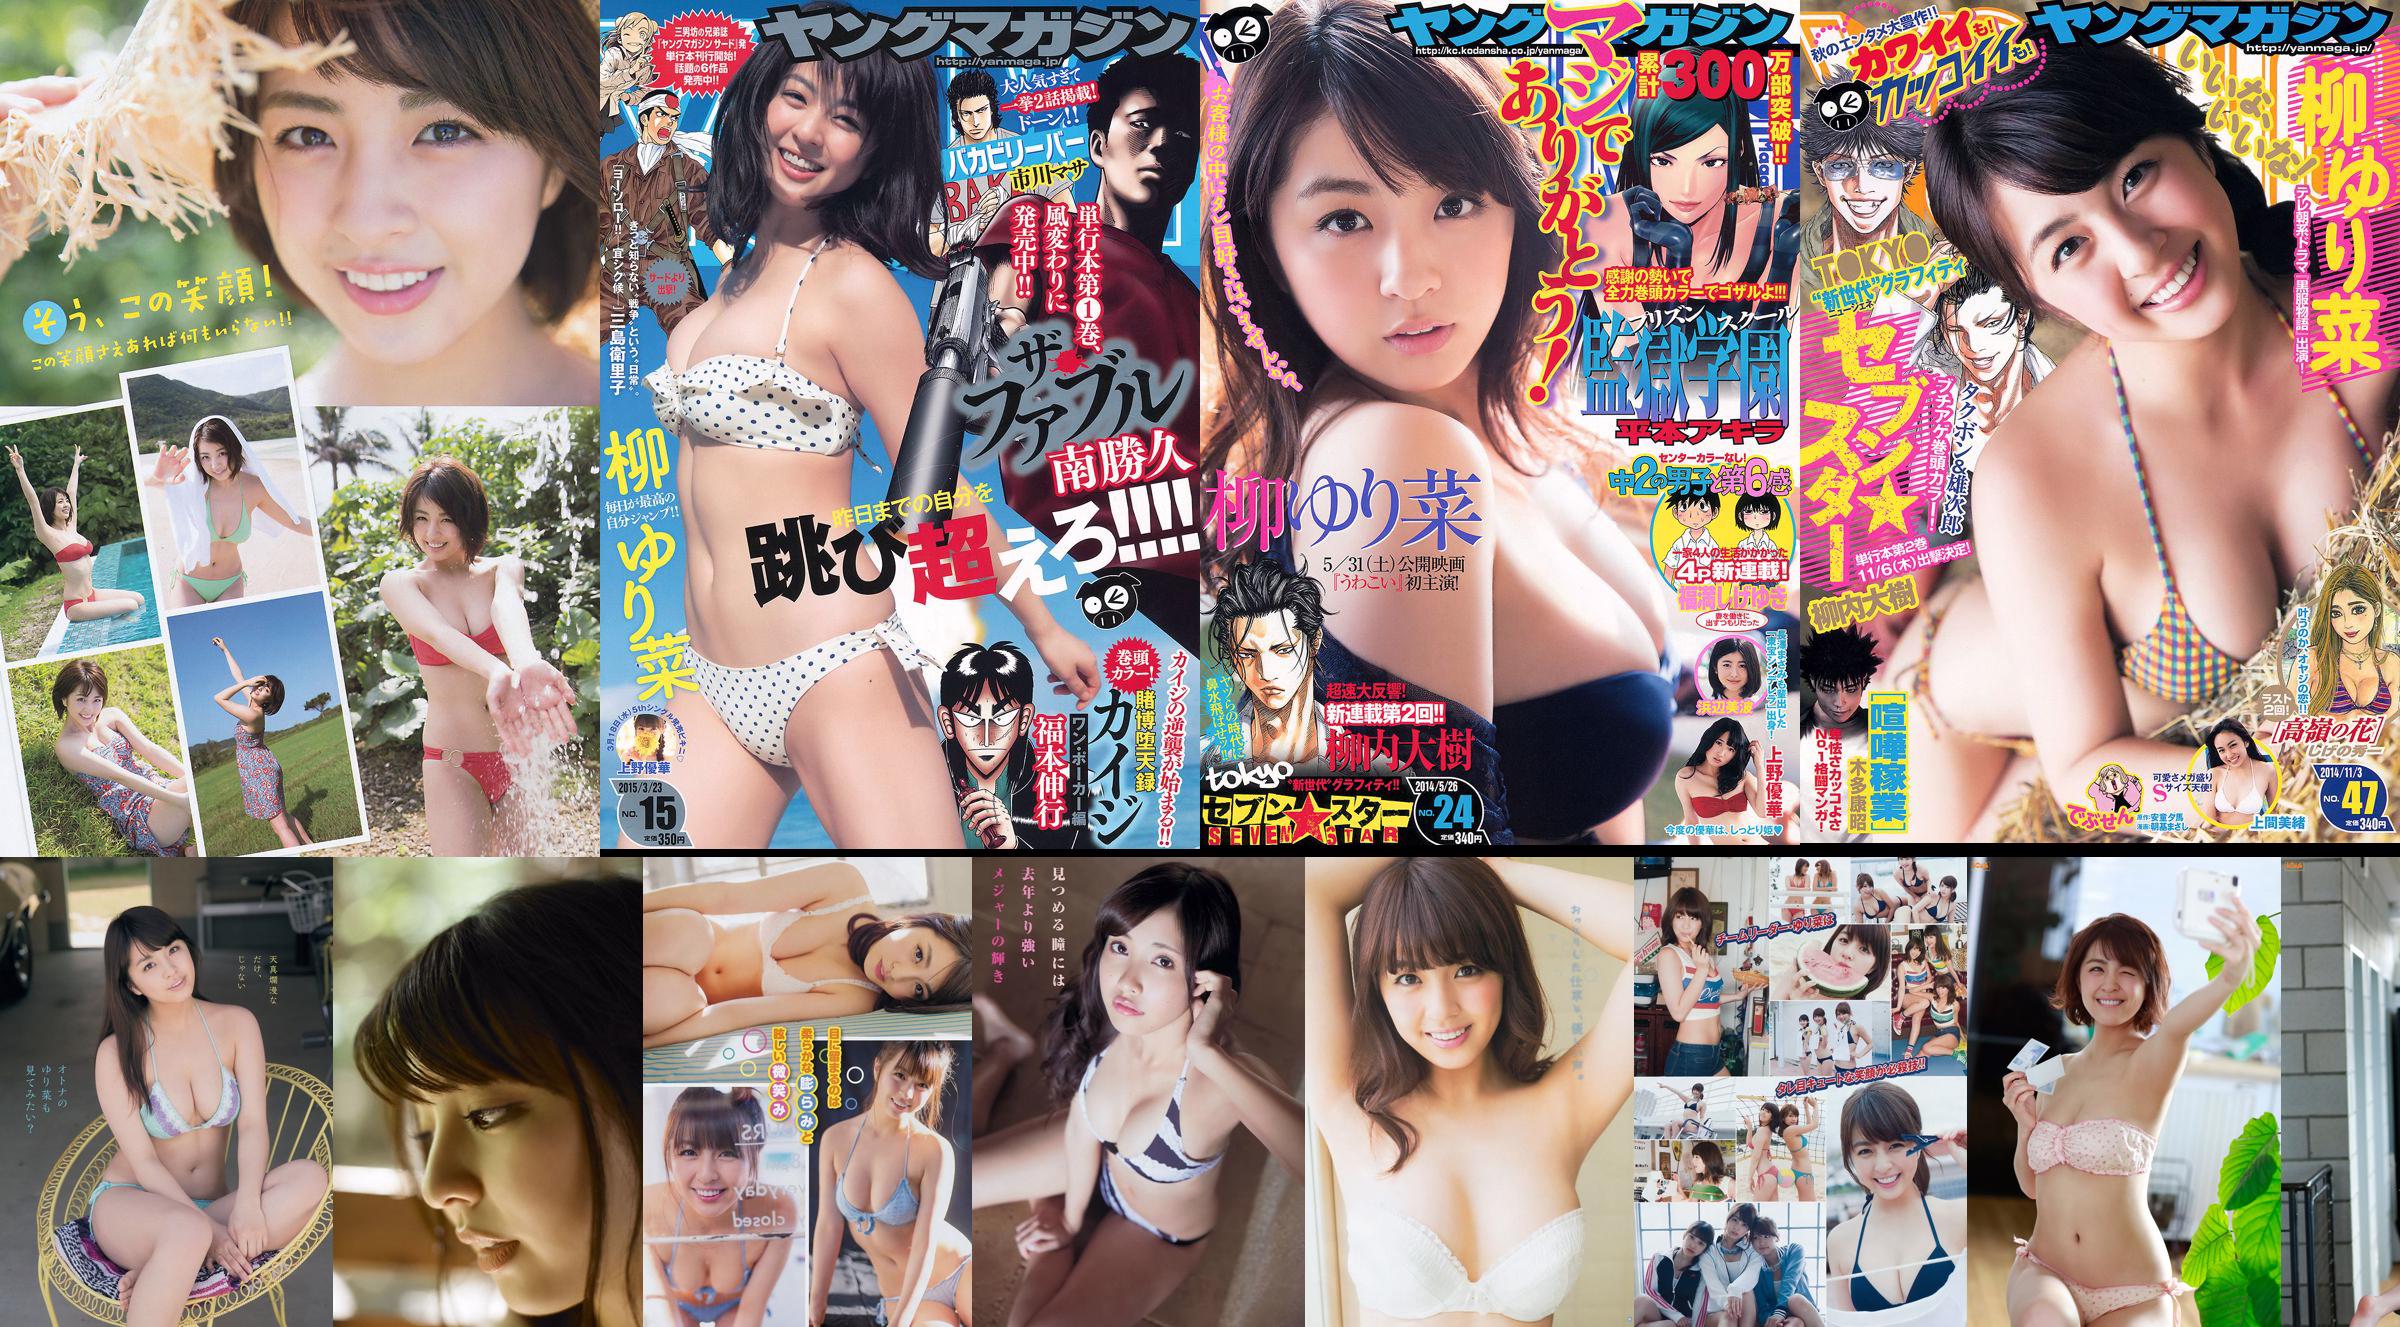 [Revista joven] Rina Yanagi Mio Uema 2014 Revista fotográfica n. ° 47 No.3ac2d1 Página 3